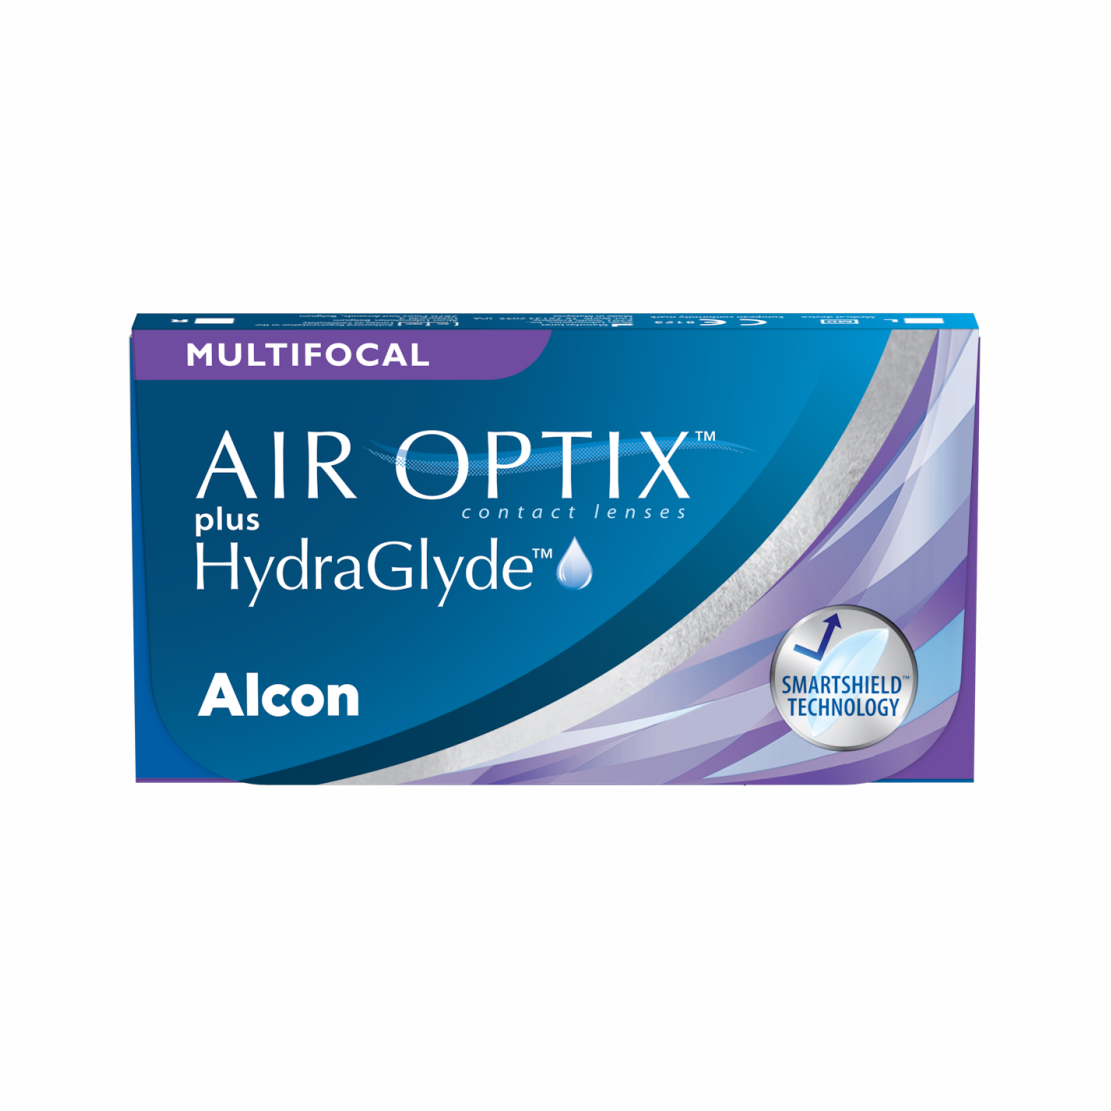 AIR OPTIX plus HydraGlyde Multifocal, Alcon